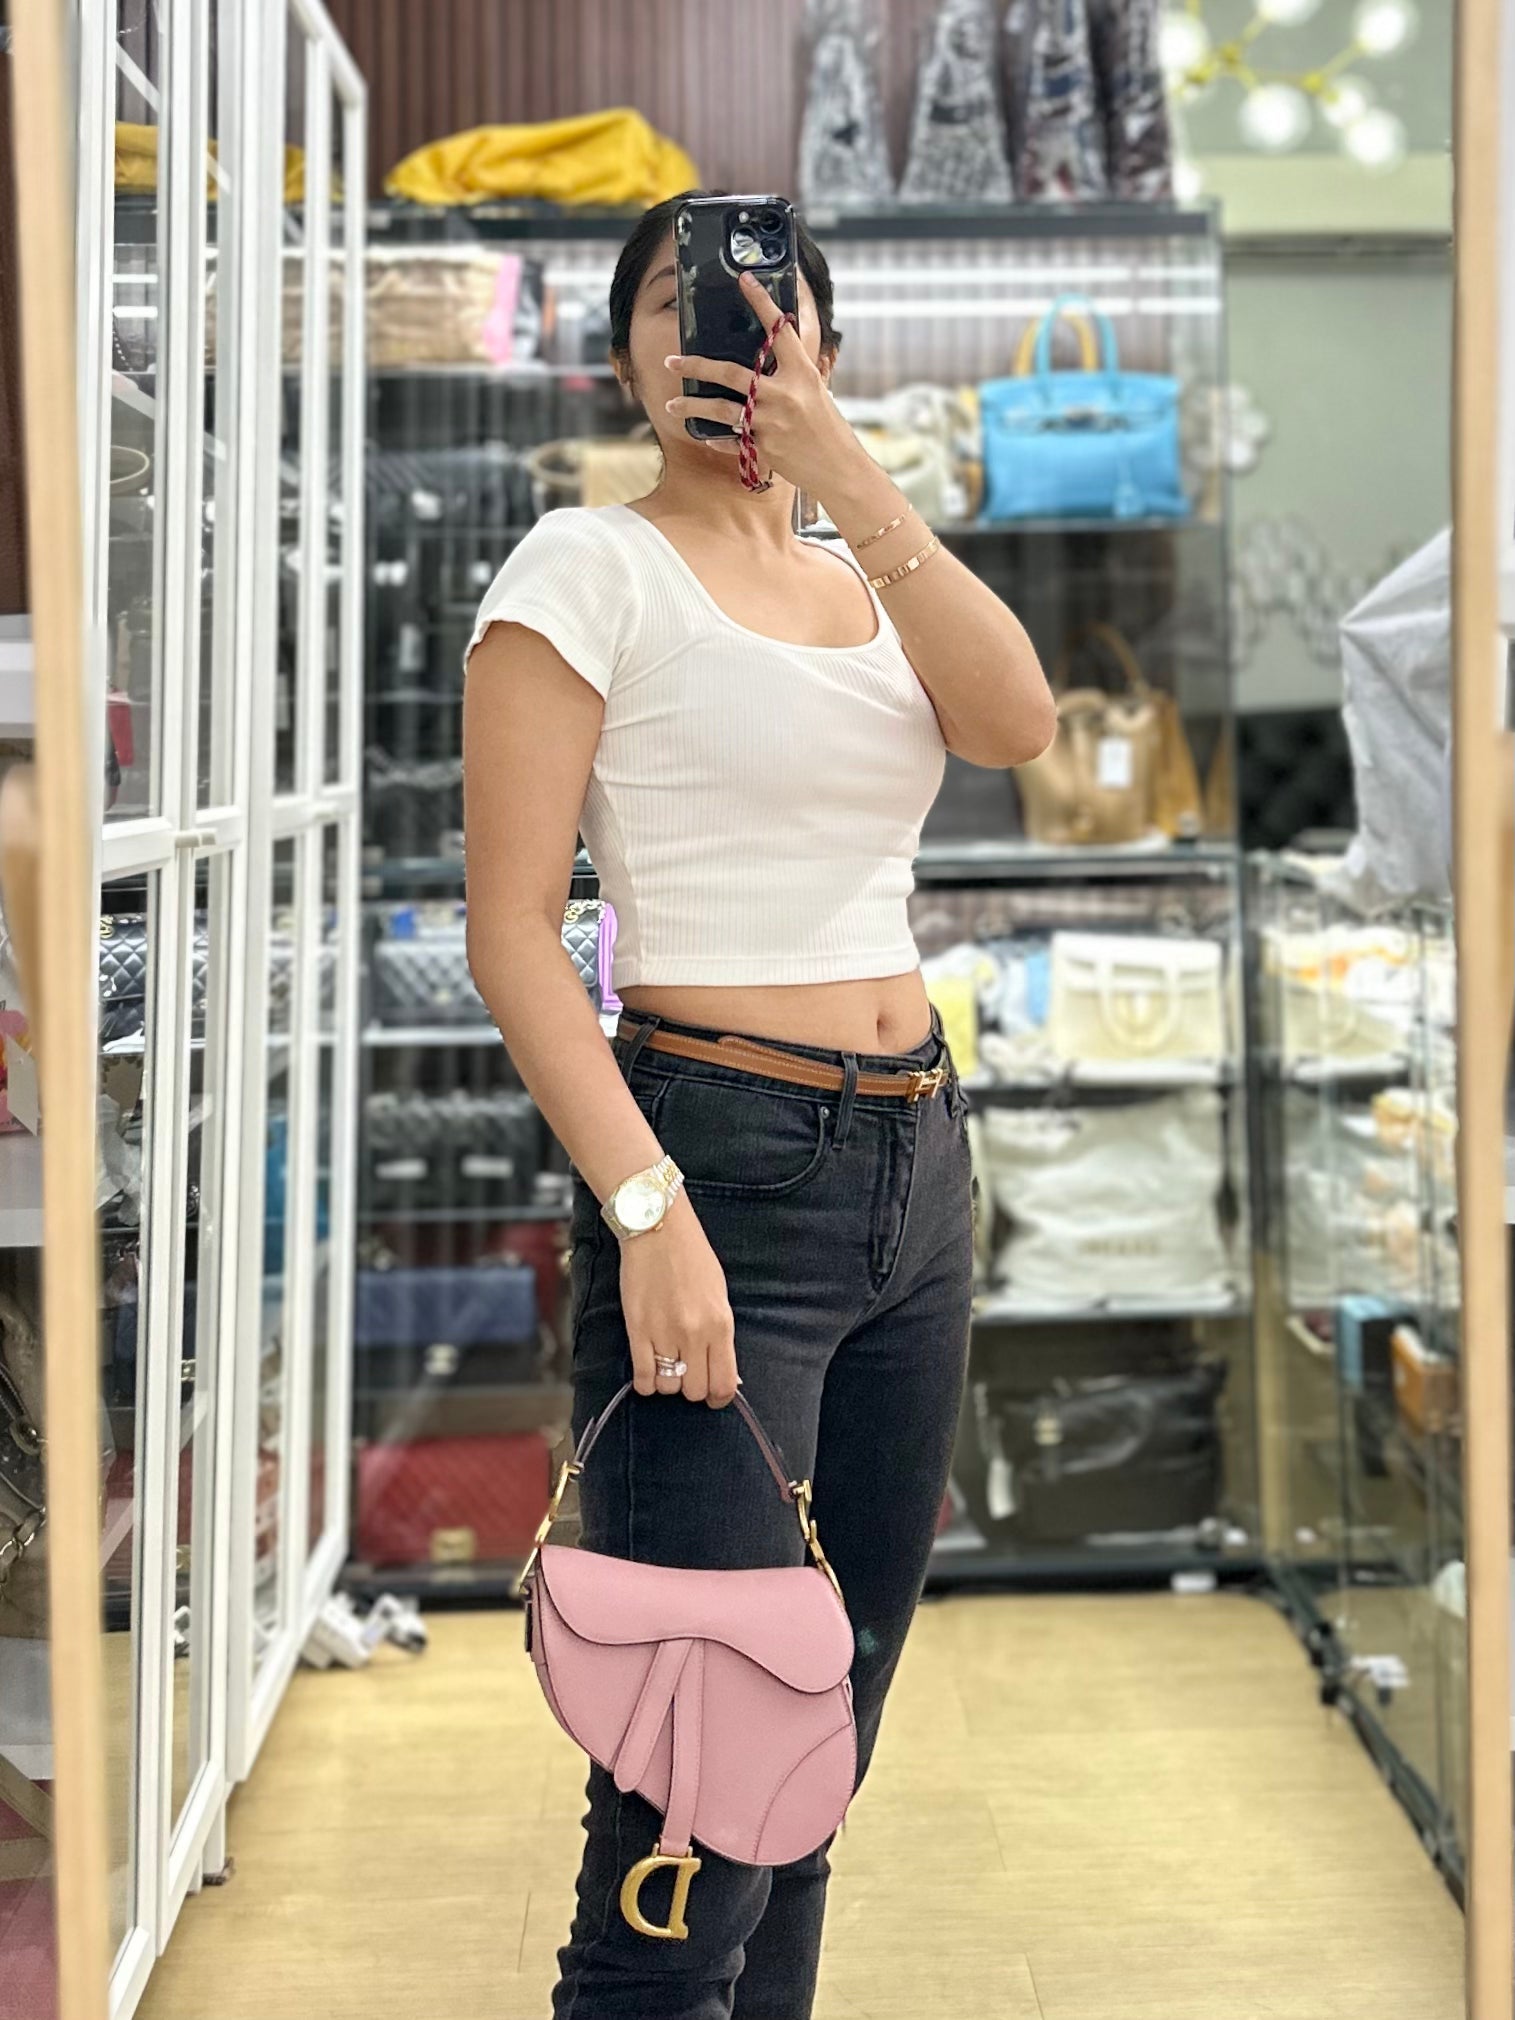 Christian Dior Mini Saddle Blush Pink Grained Calfskin Leather | Purse Maison Luxury Bags Shop